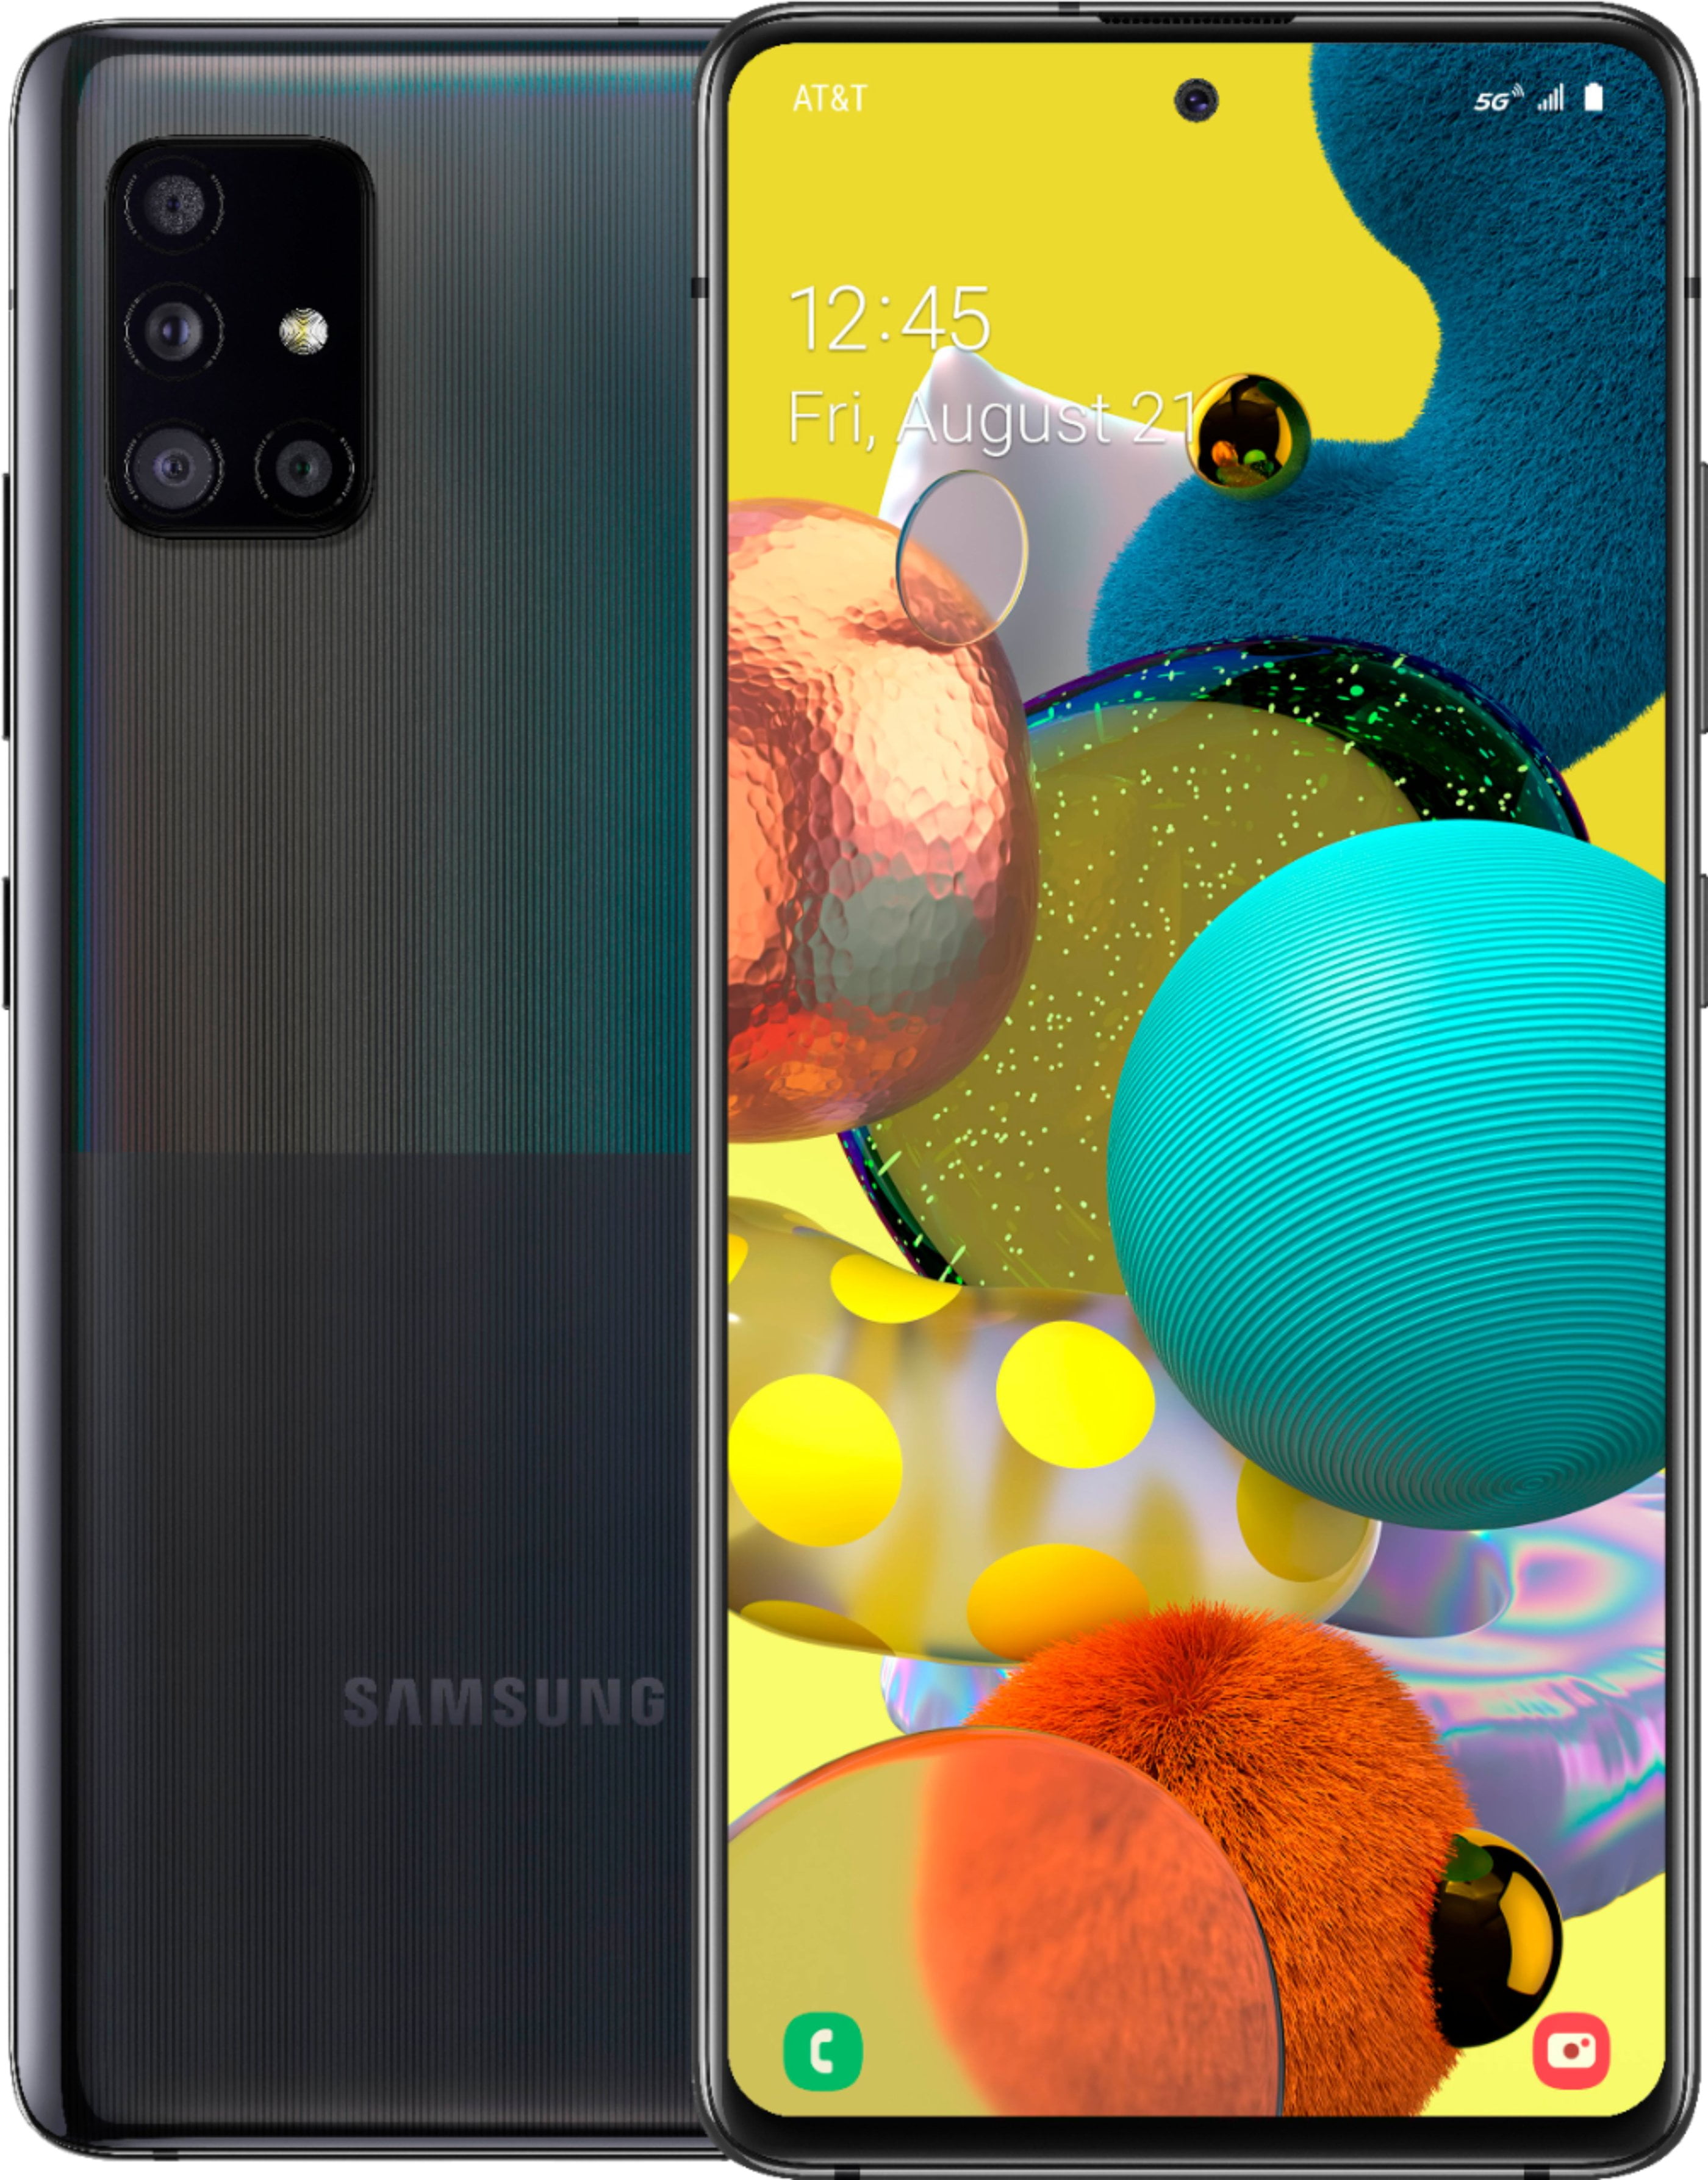 Samsung Galaxy A51 camera capabilities